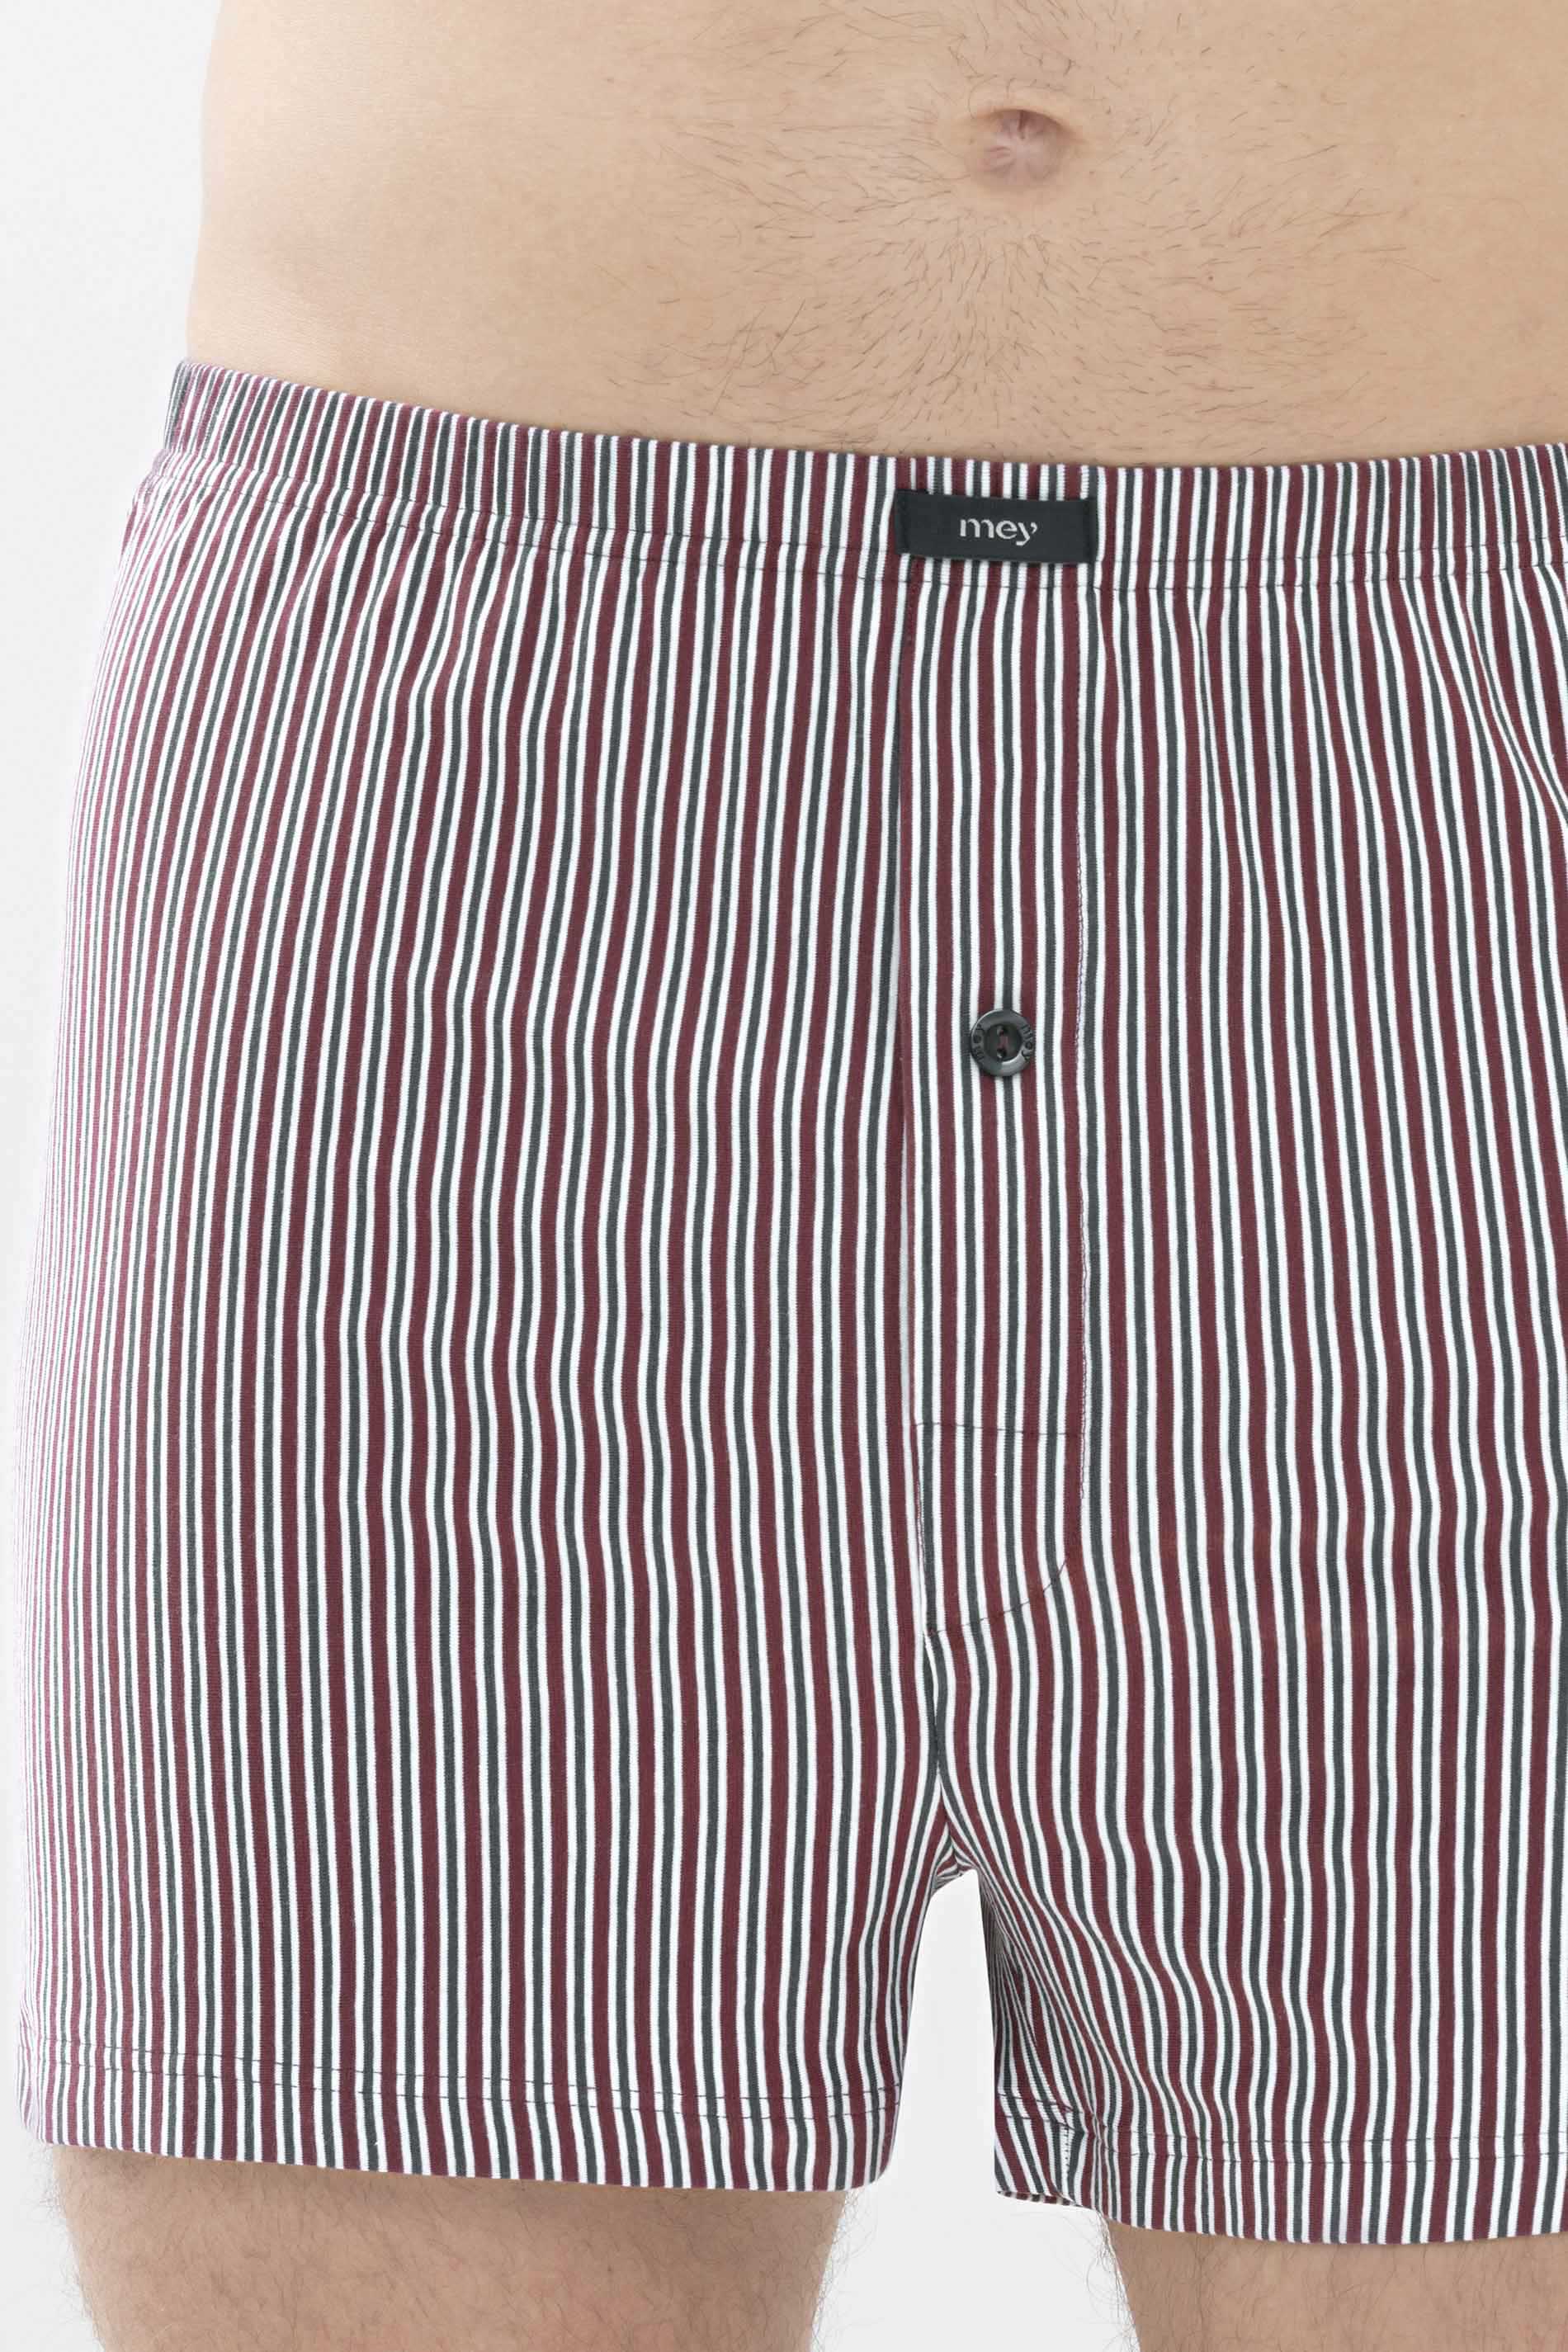 Boxershorts Oxblood Serie 3 Col Stripes Detailansicht 01 | mey®